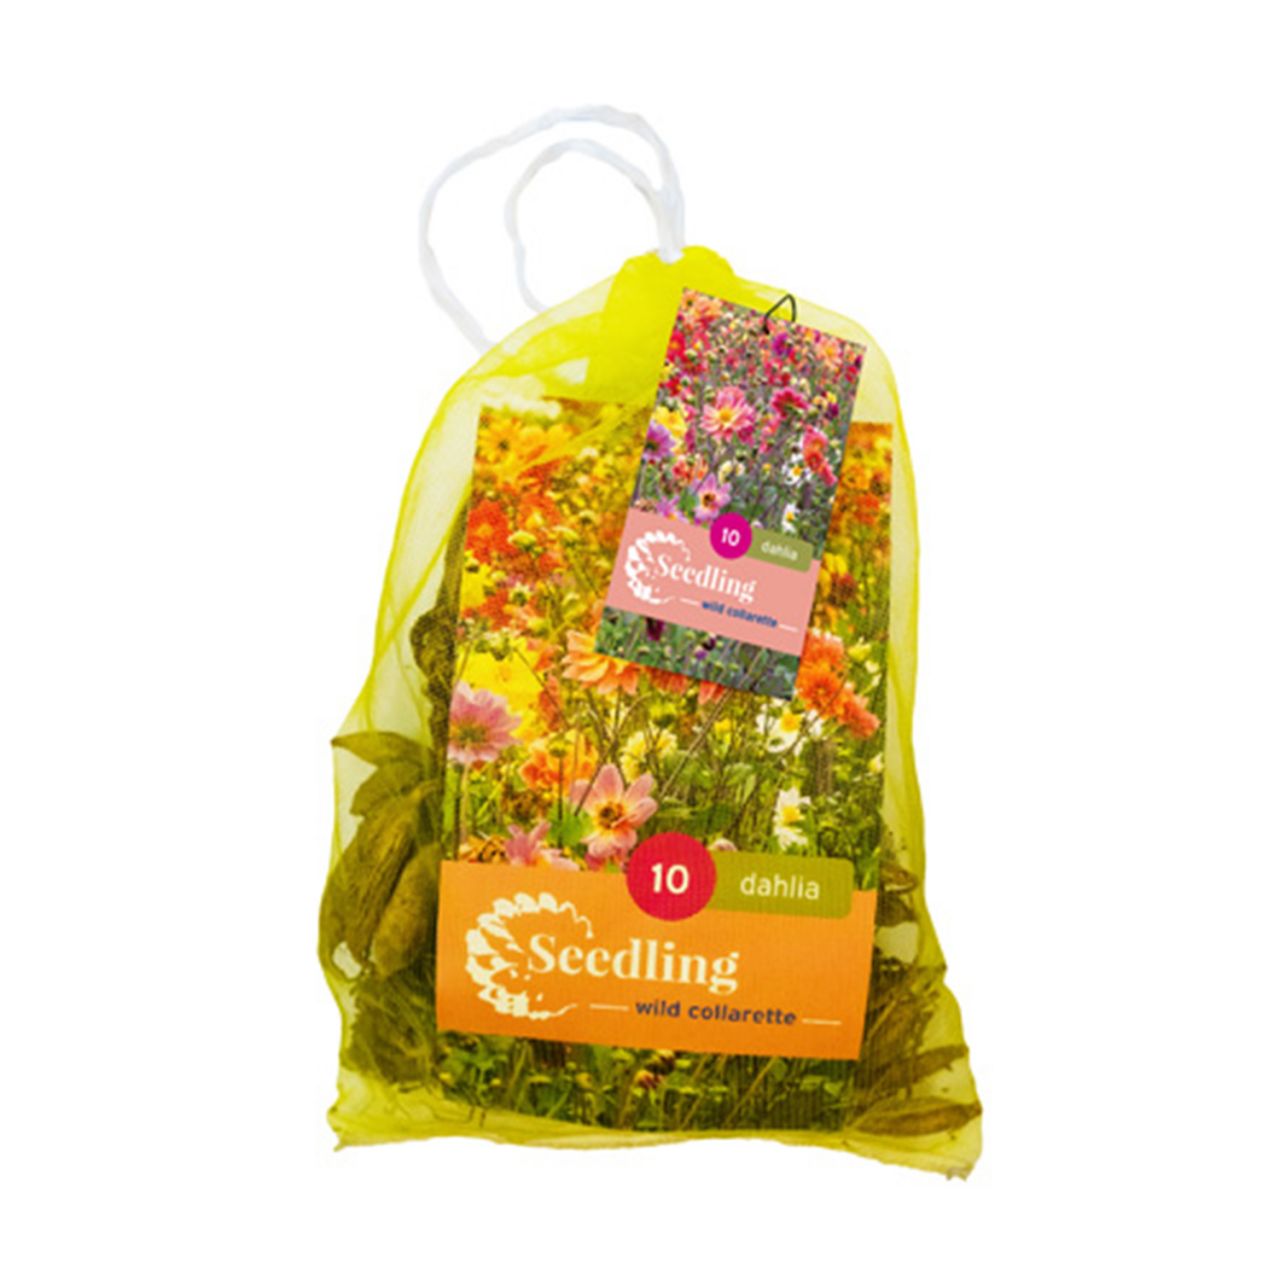 Kategorie <b>Frühlings-Blumenzwiebeln </b> - Wilde Halskrausen-Dahlien-Mischung - 10 Stück - Dahlia Seedling Collarette